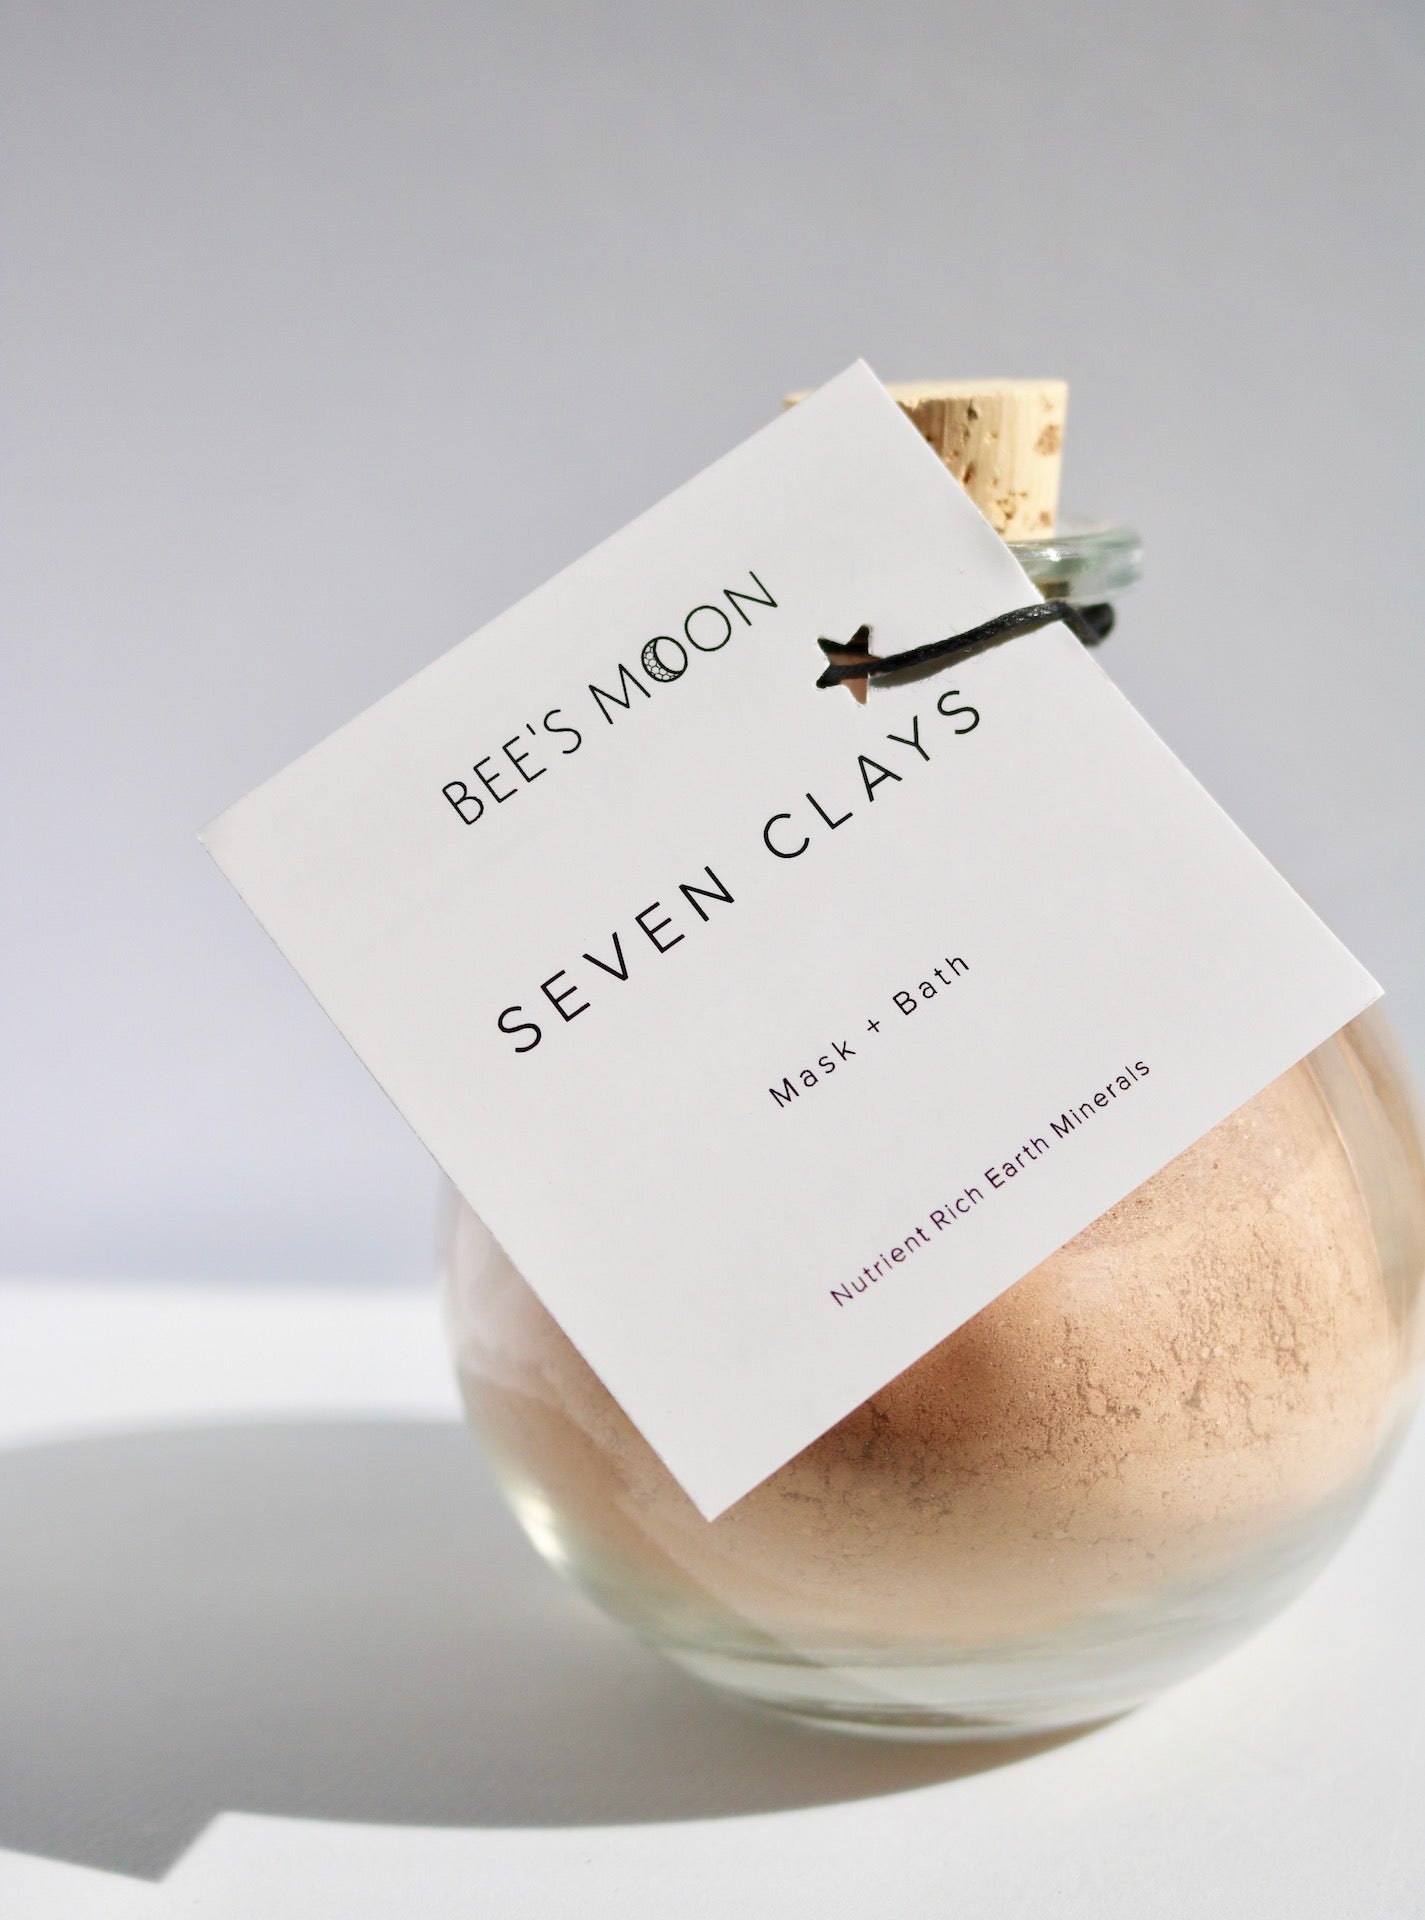 Seven Clays Mask + Bath